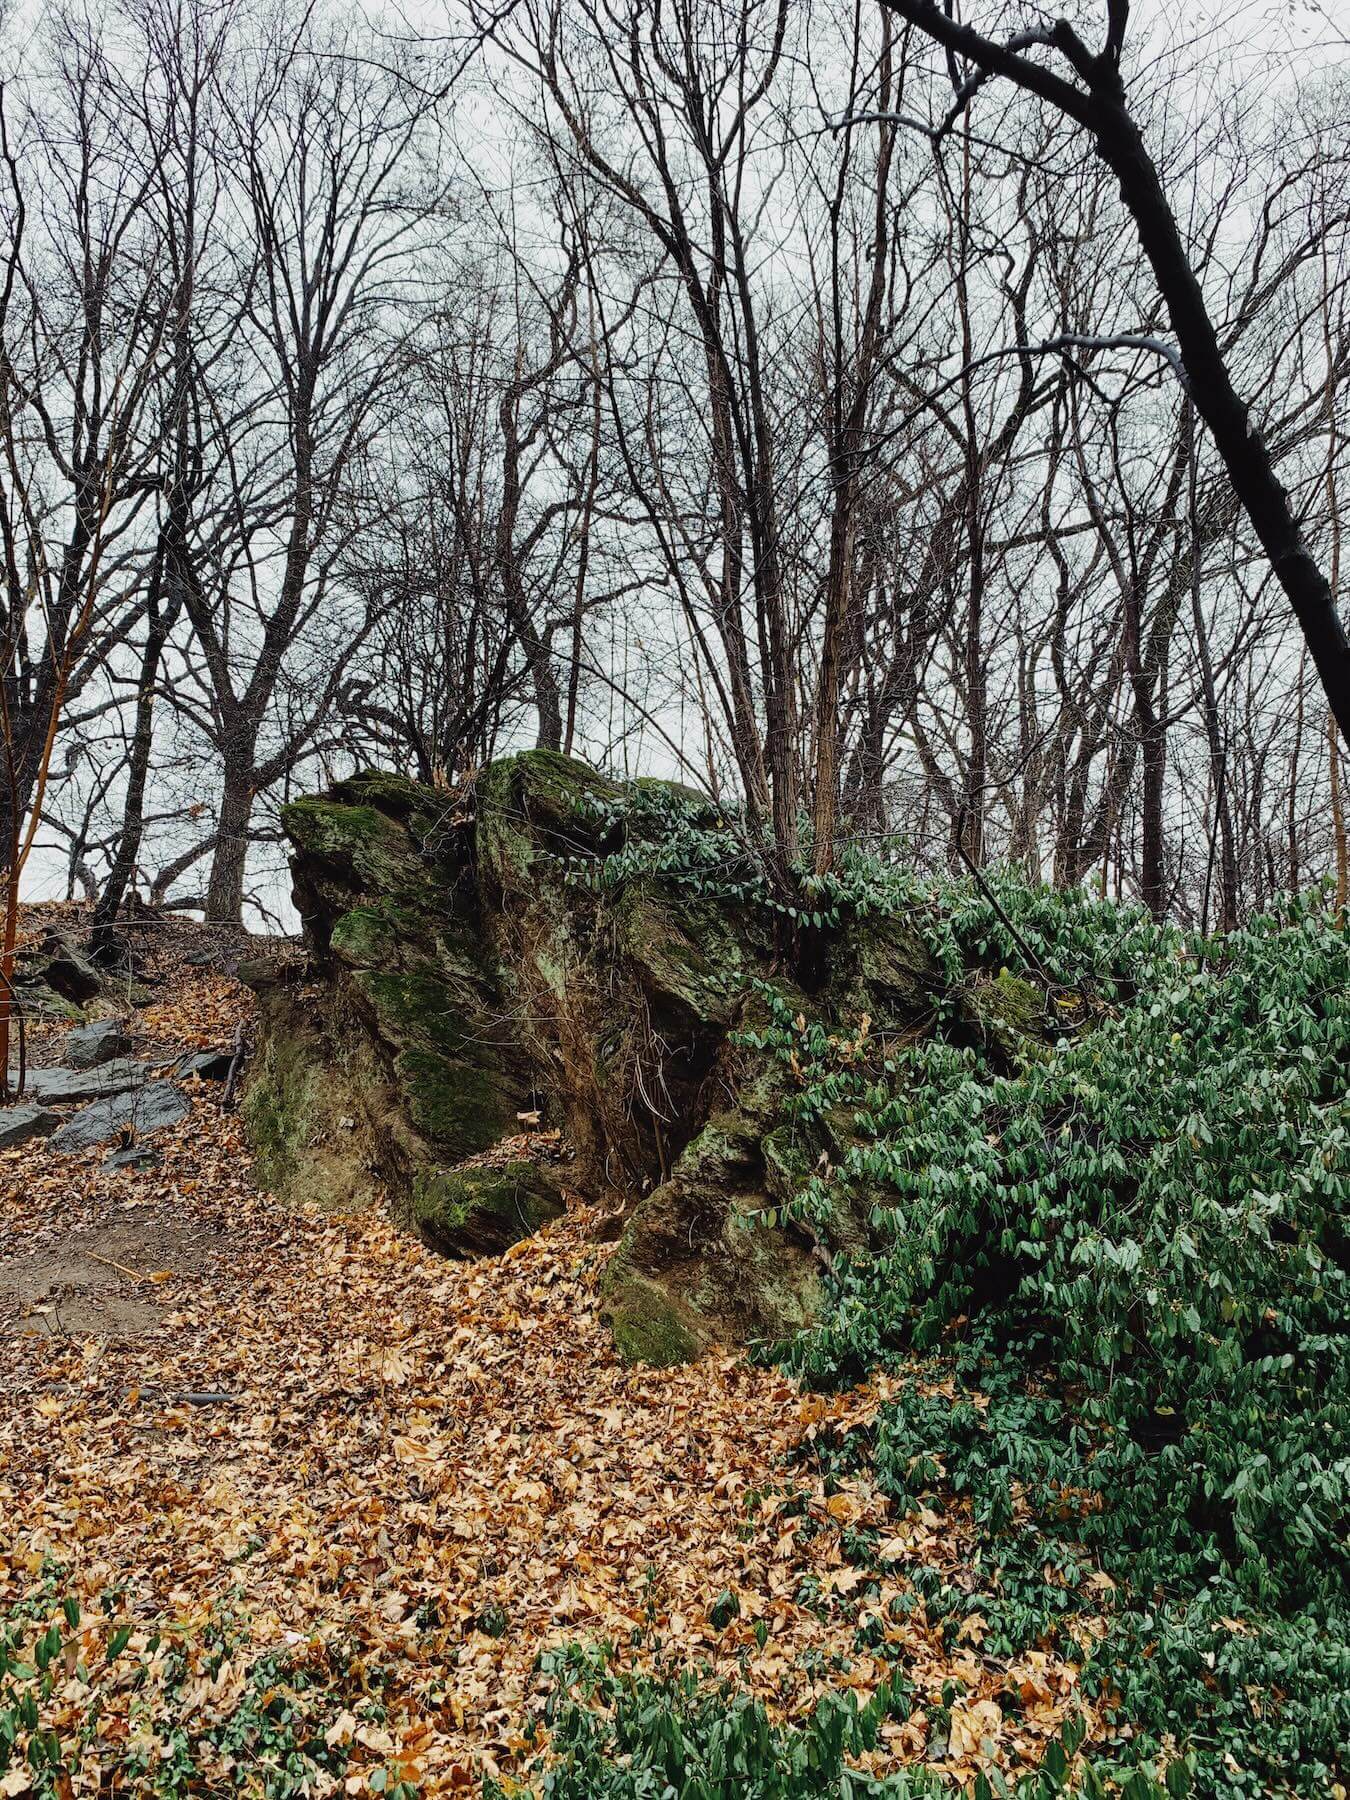 Matthias Maier | Rocks in the Park